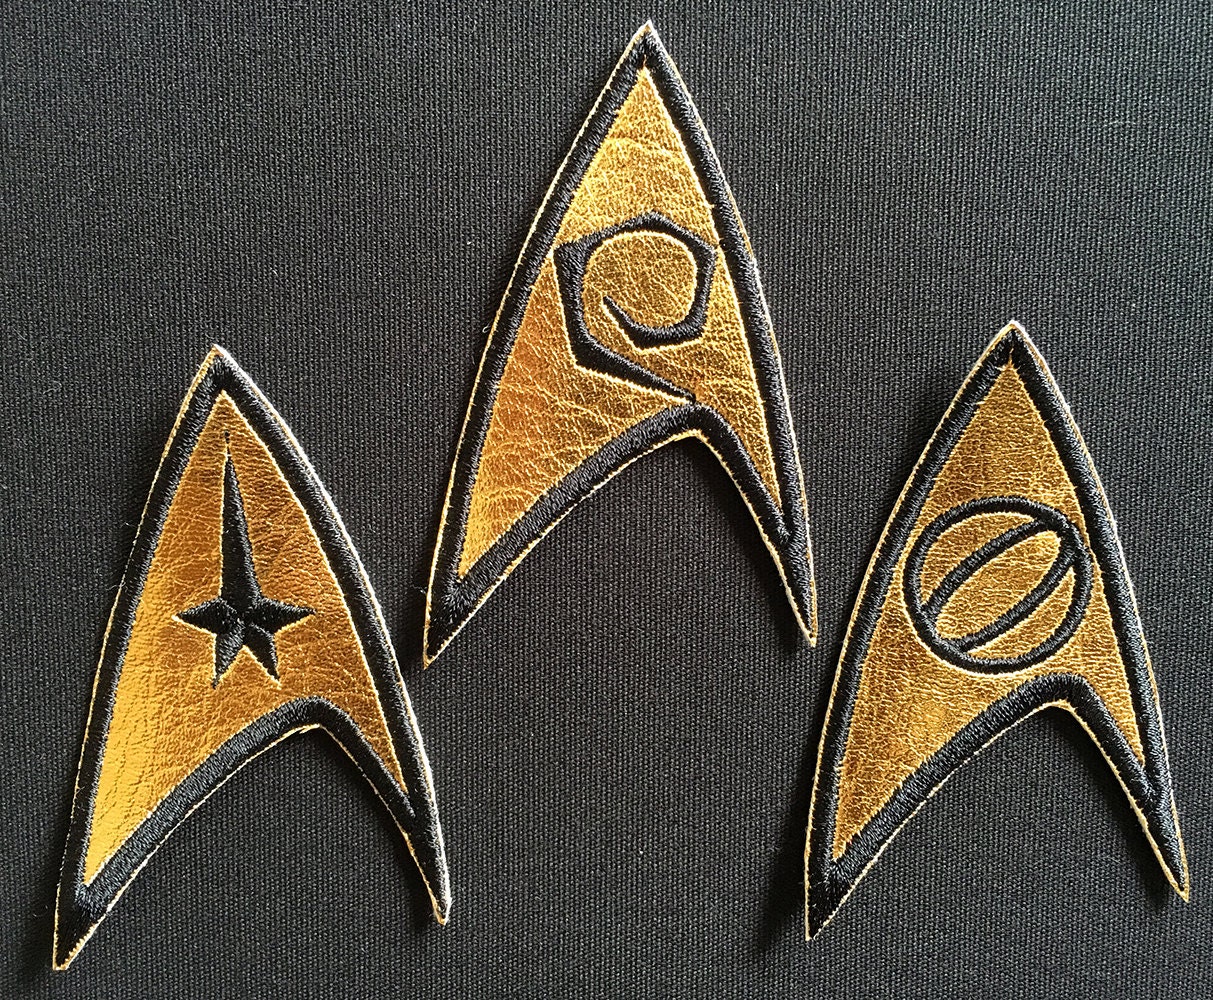 Star Trek Original Series Command Insignia Logo Patch 3 1/2 inches tall TOS 